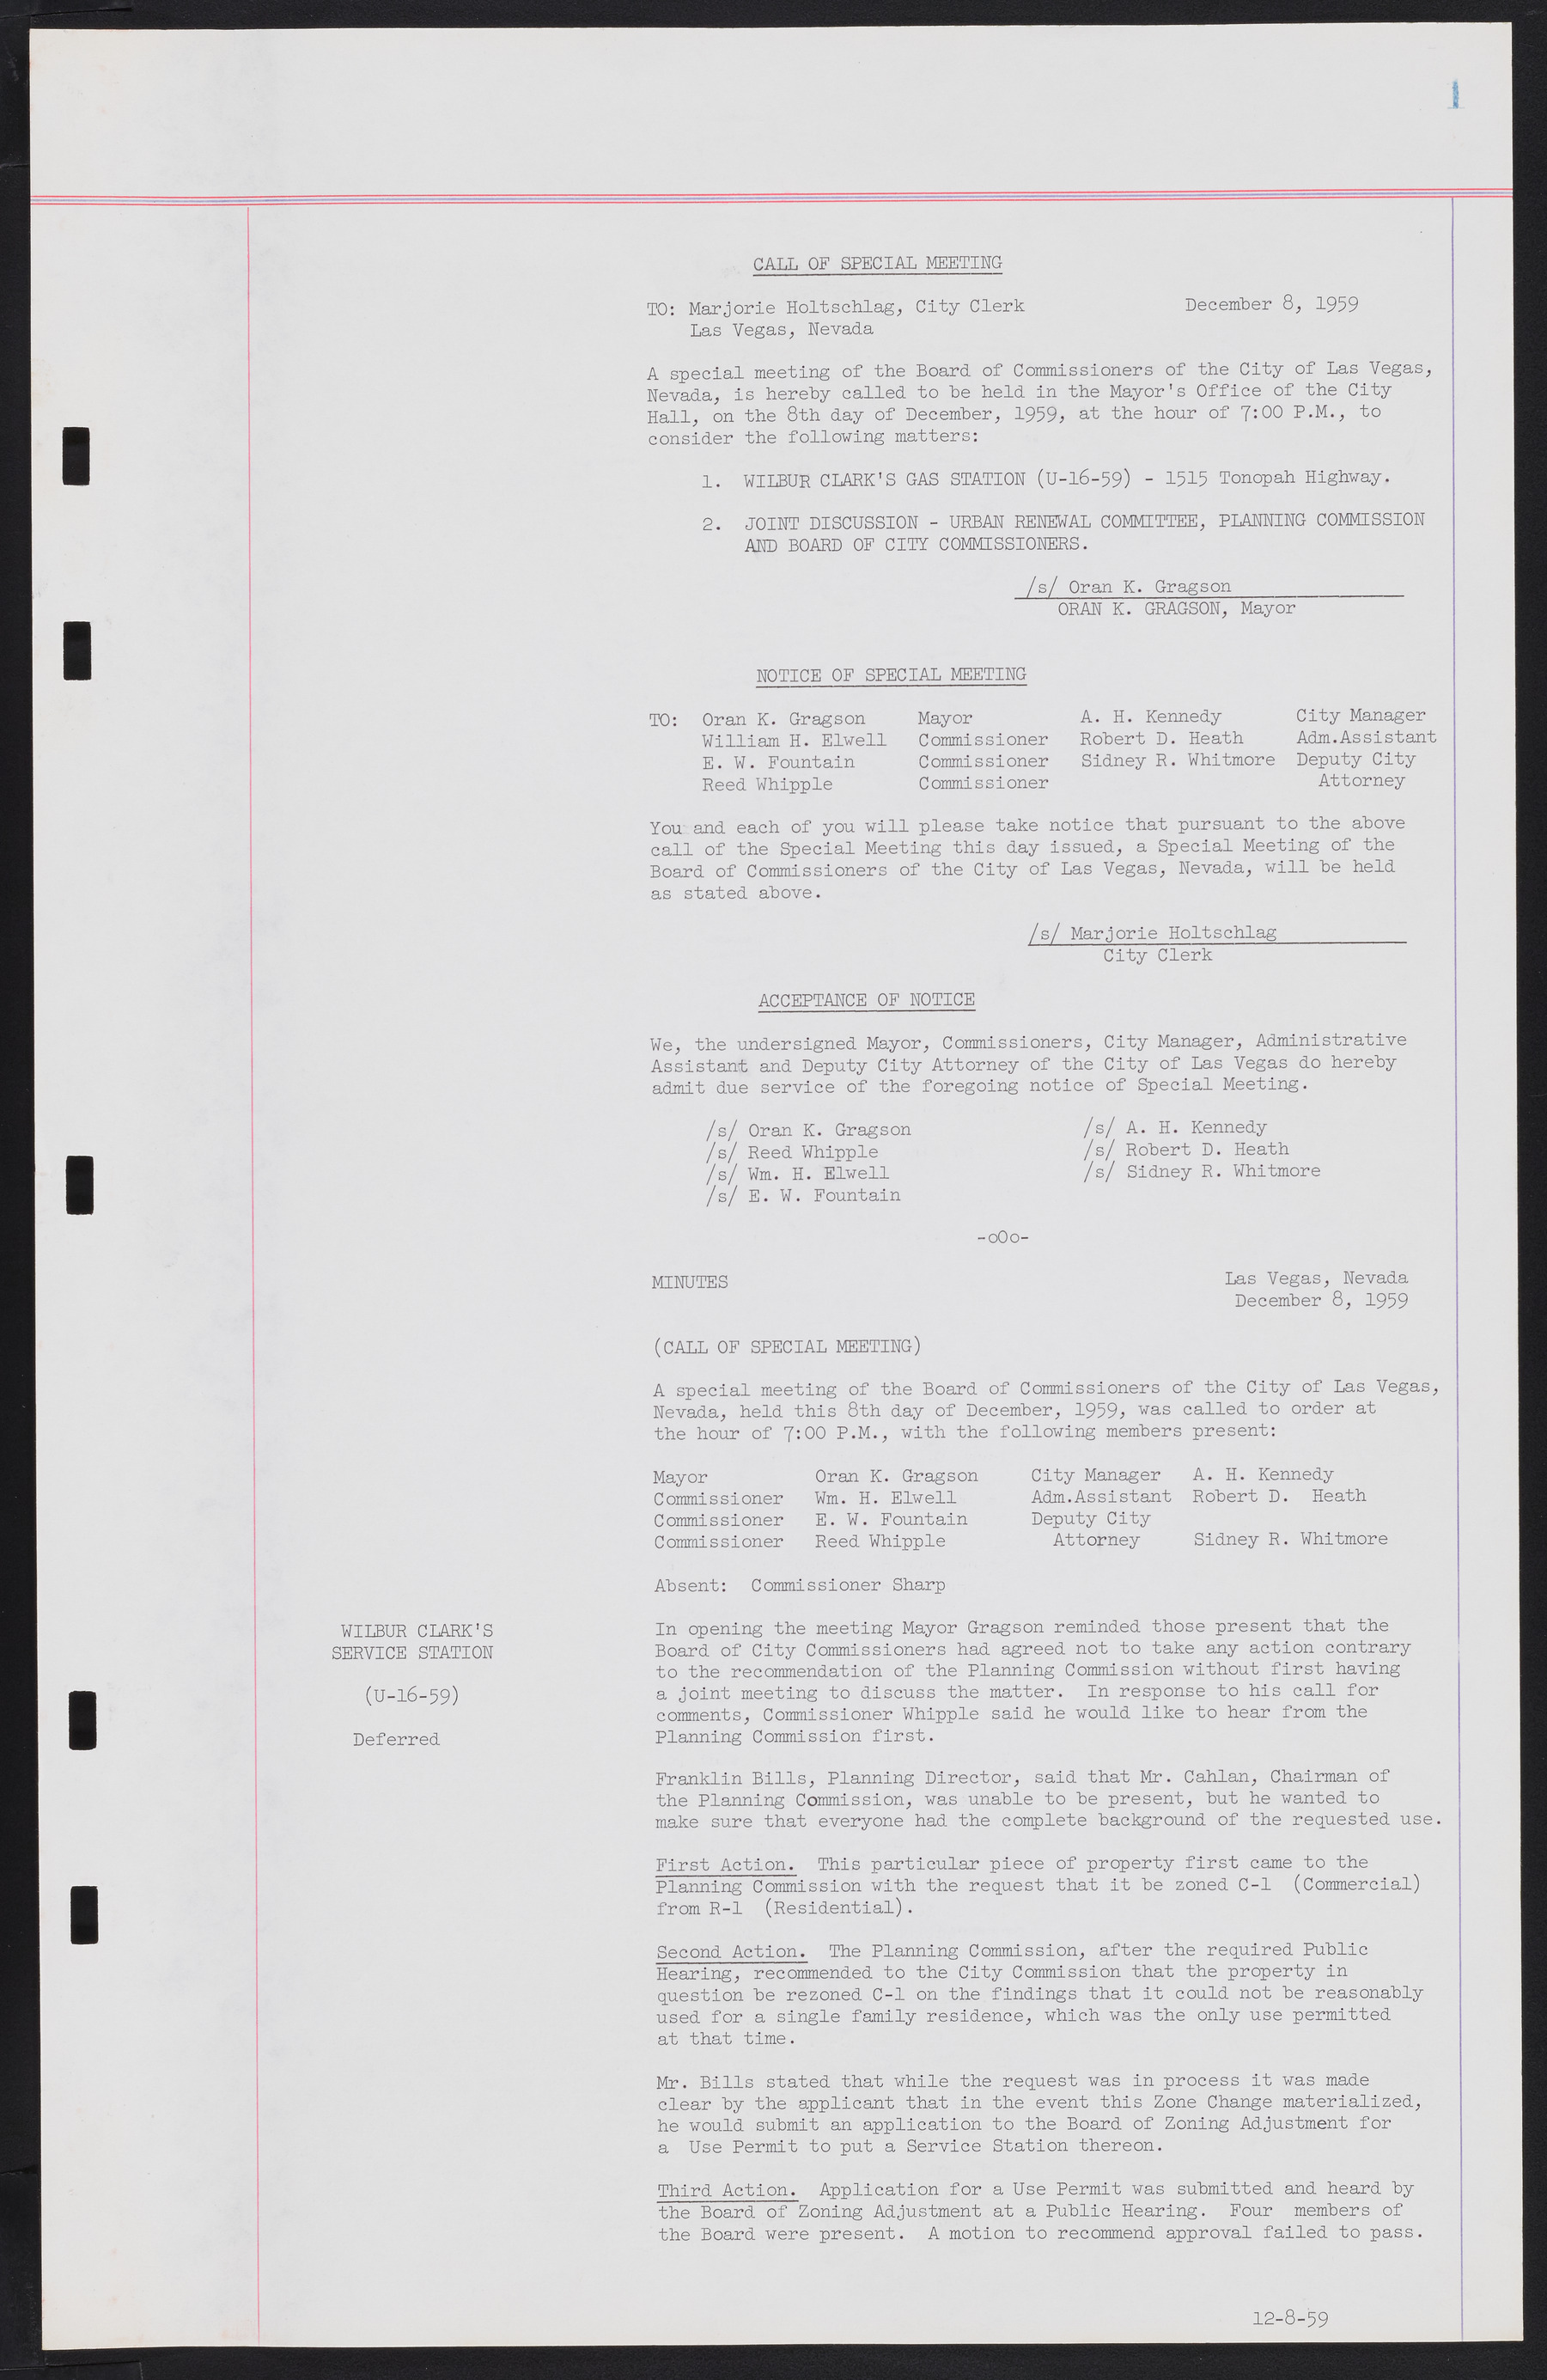 Las Vegas City Commission Minutes, December 8, 1959 to February 17, 1960, lvc000012-5